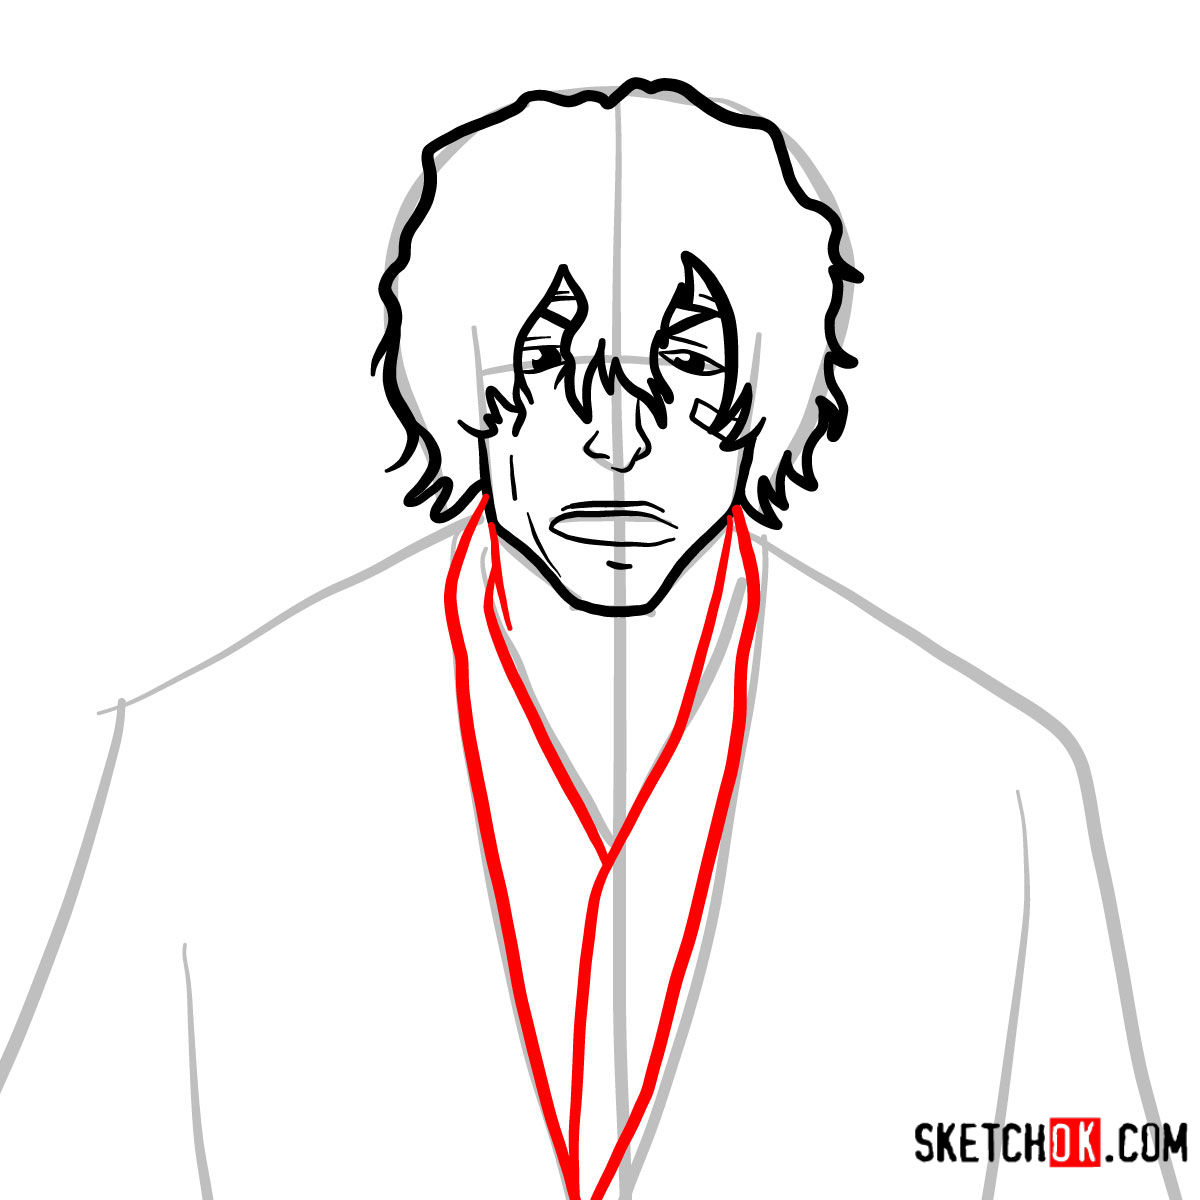 How to draw Yasutora Chad Sado face  Bleach - Sketchok easy drawing  guides